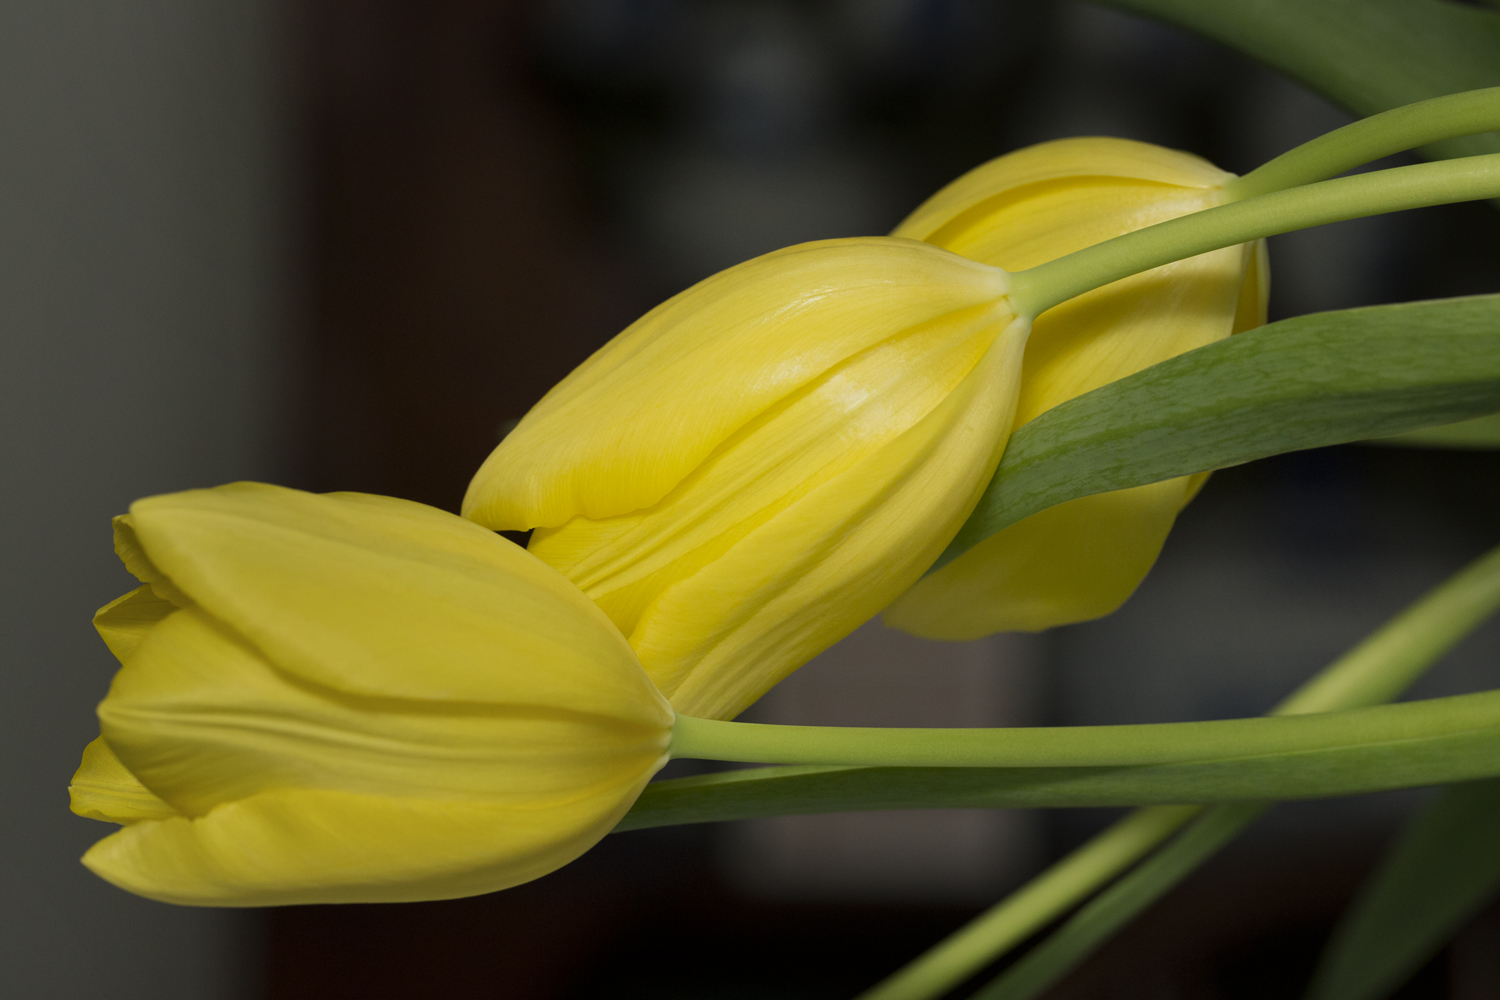 amys_yellow_tulips_02-11-16_4099.jpg